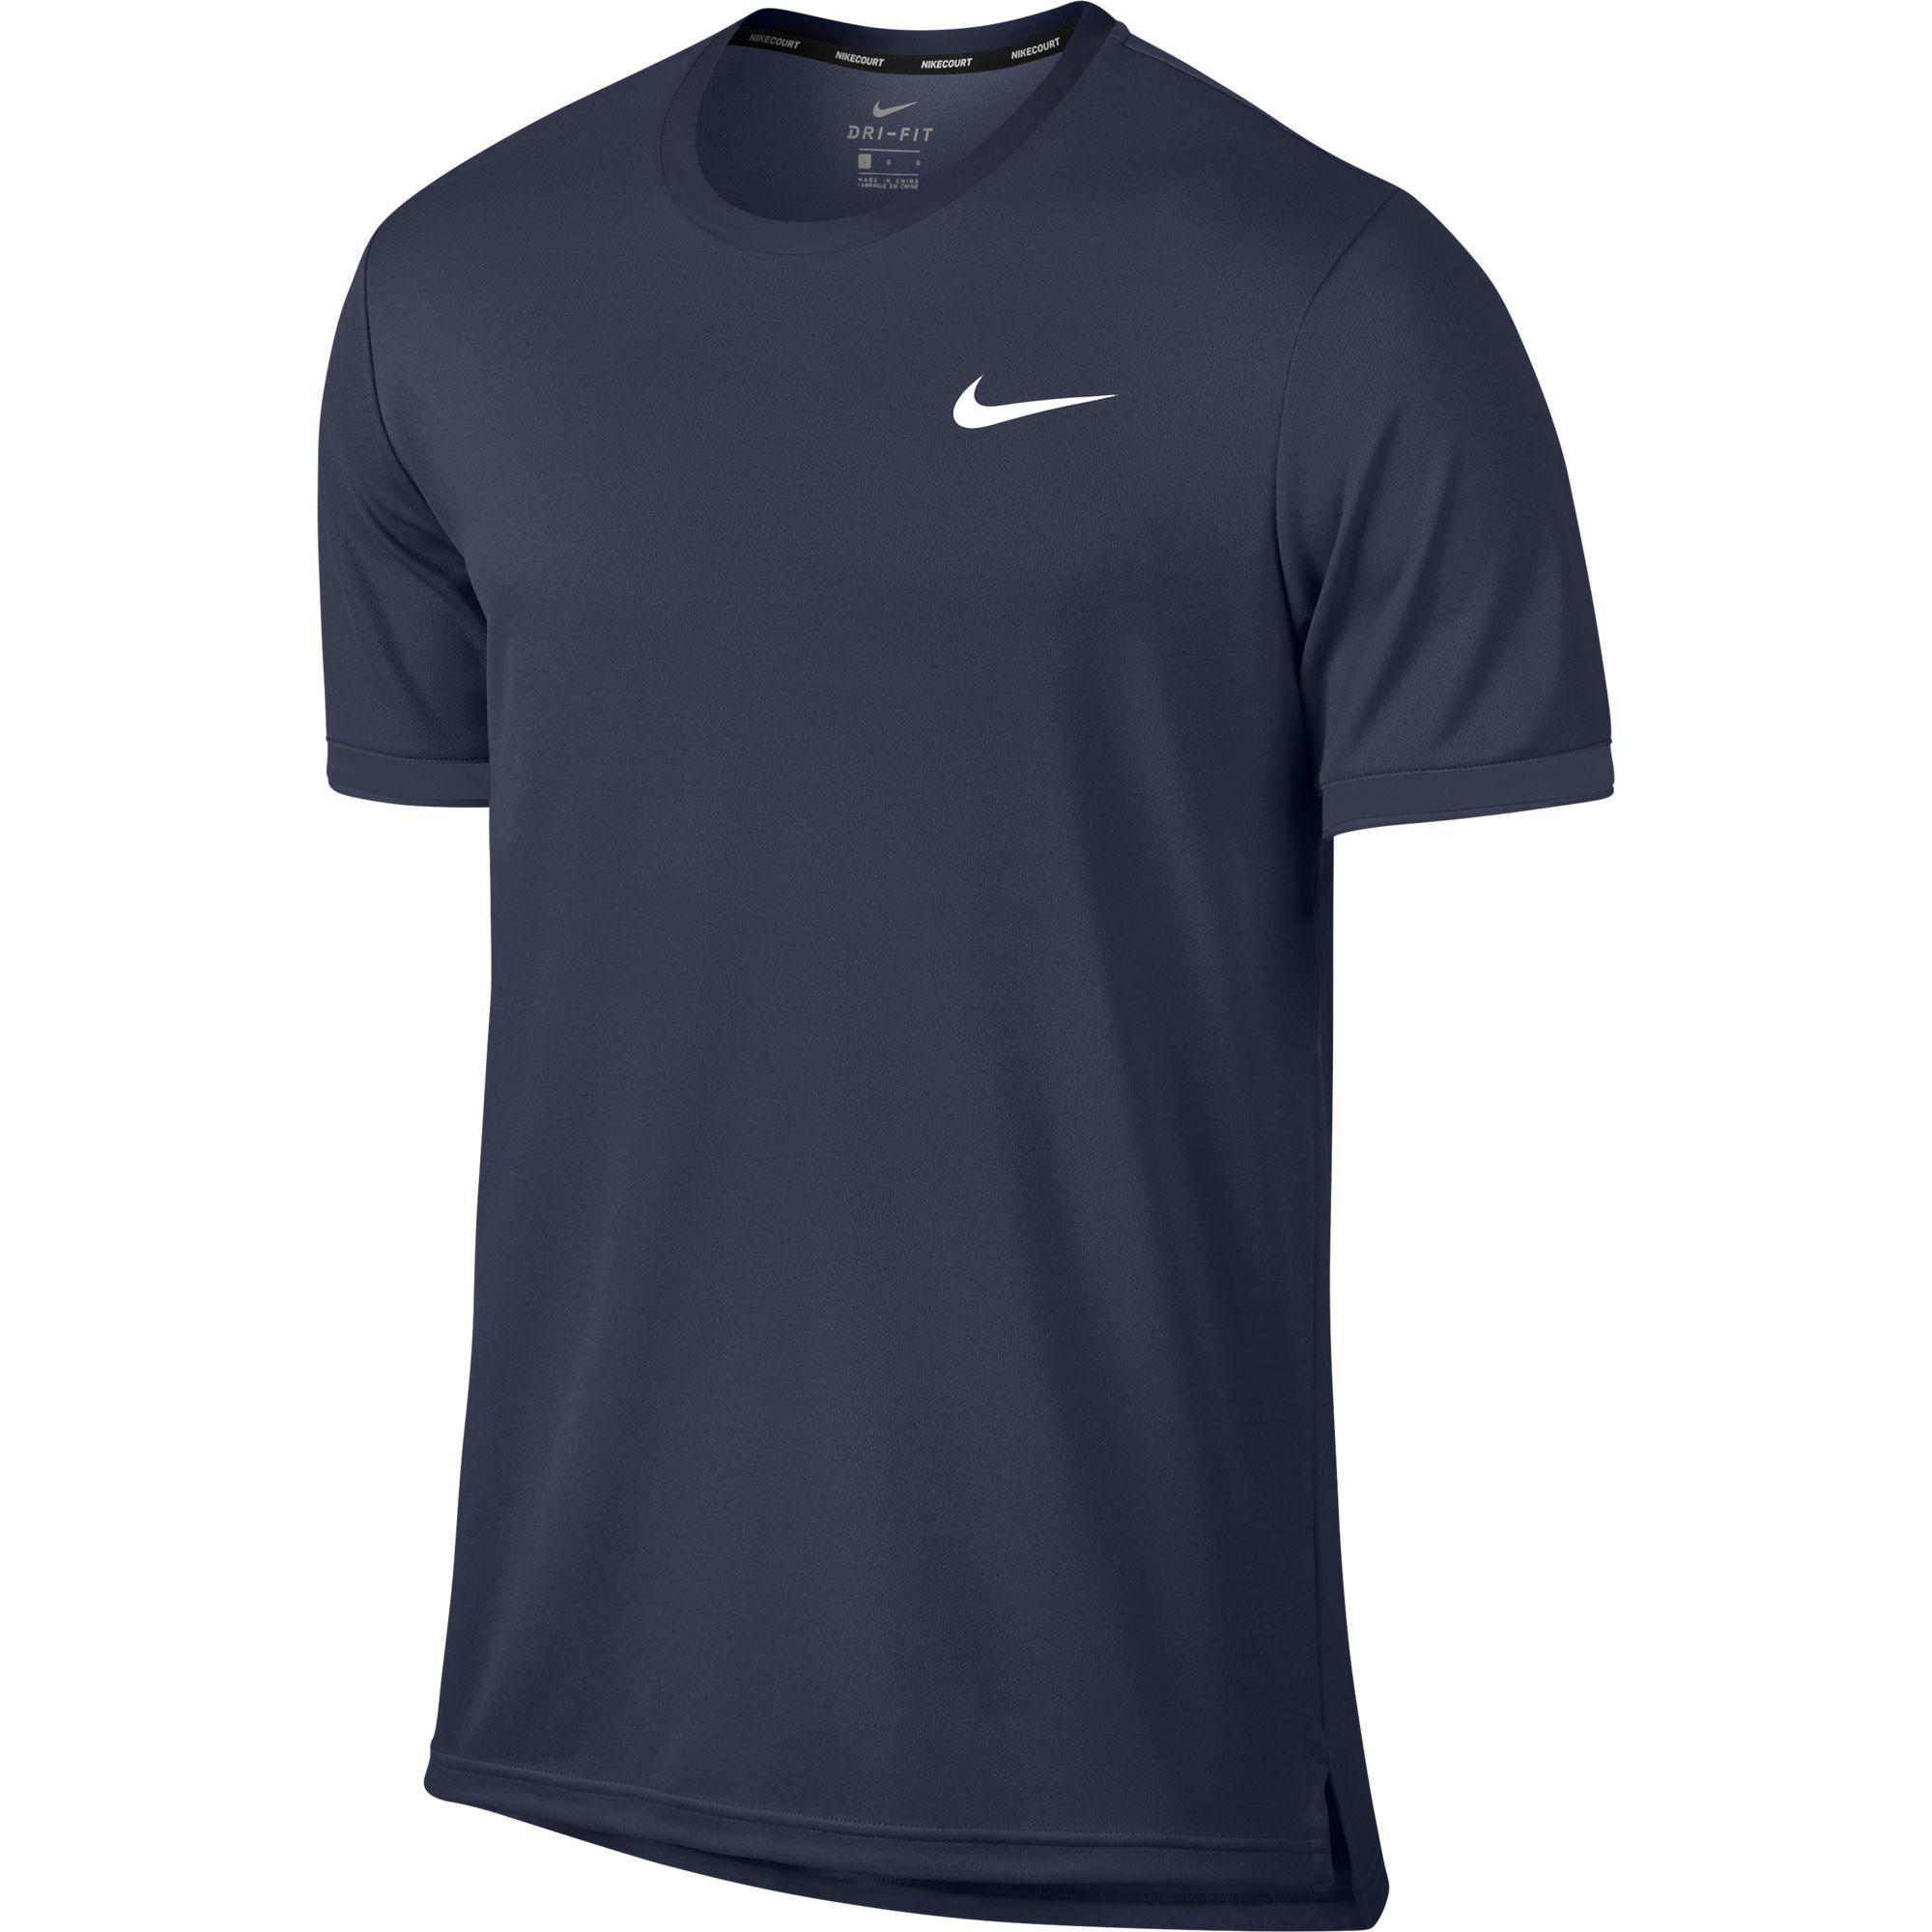 Nike Mens Court Dry Tennis Top - Navy - Tennisnuts.com